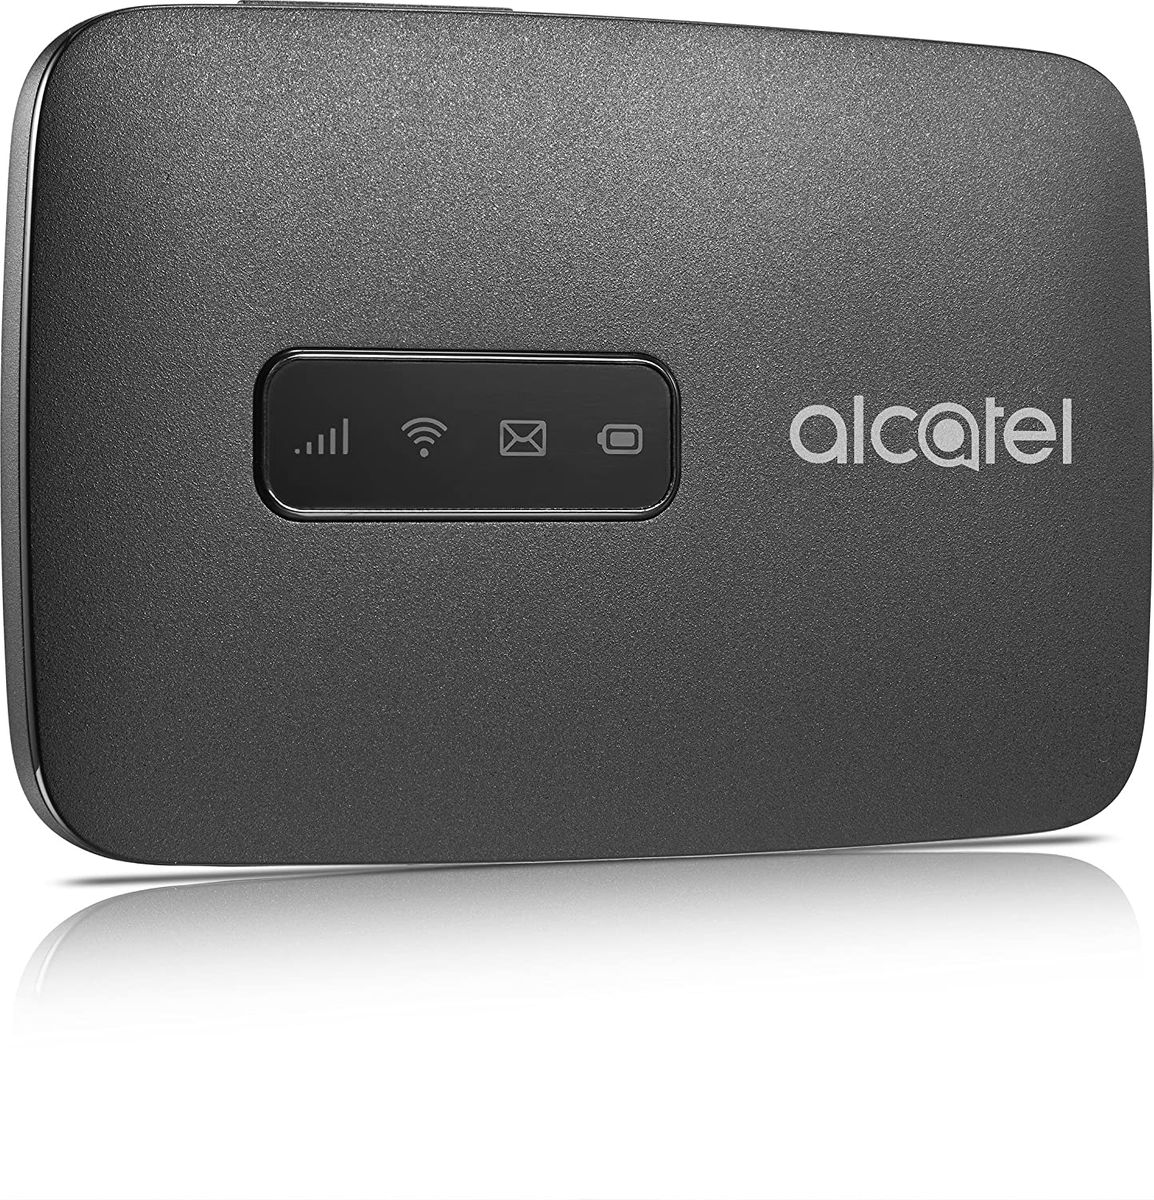 Alcatel LINKZONE 4G LTE Router for Mobile Network